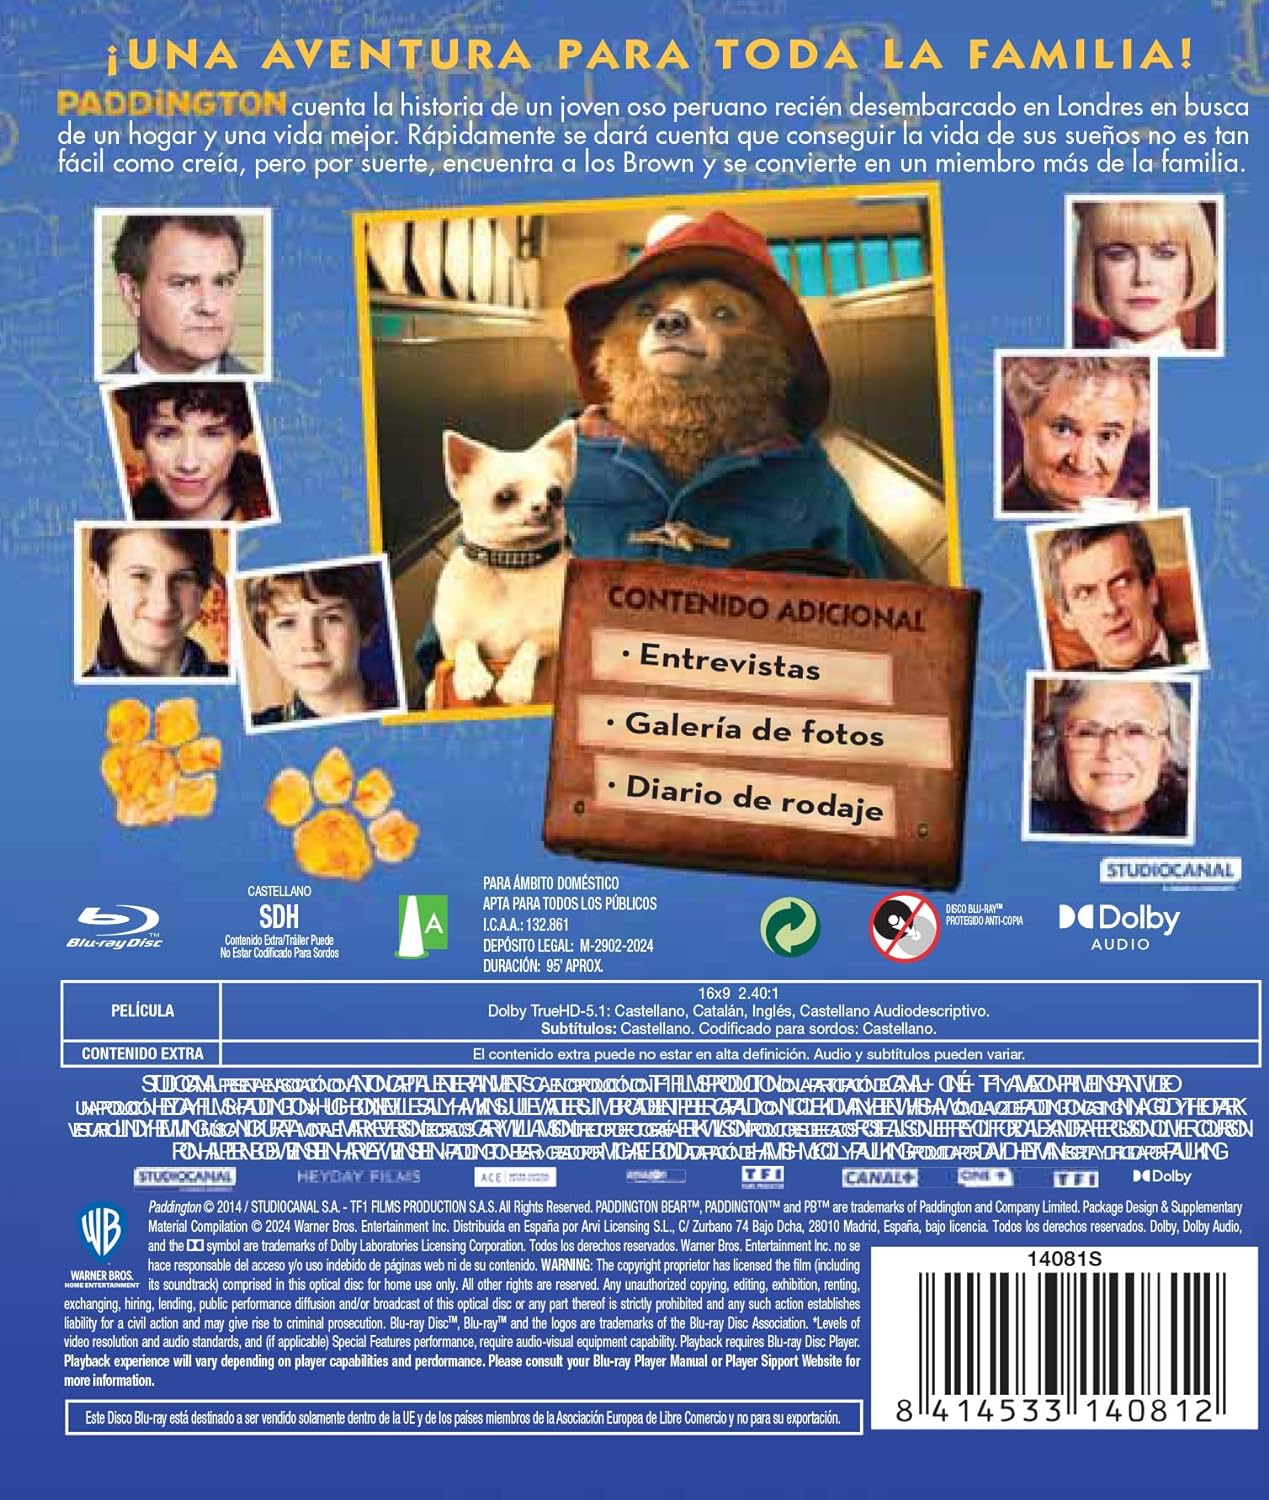 Paddington Blu-Ray